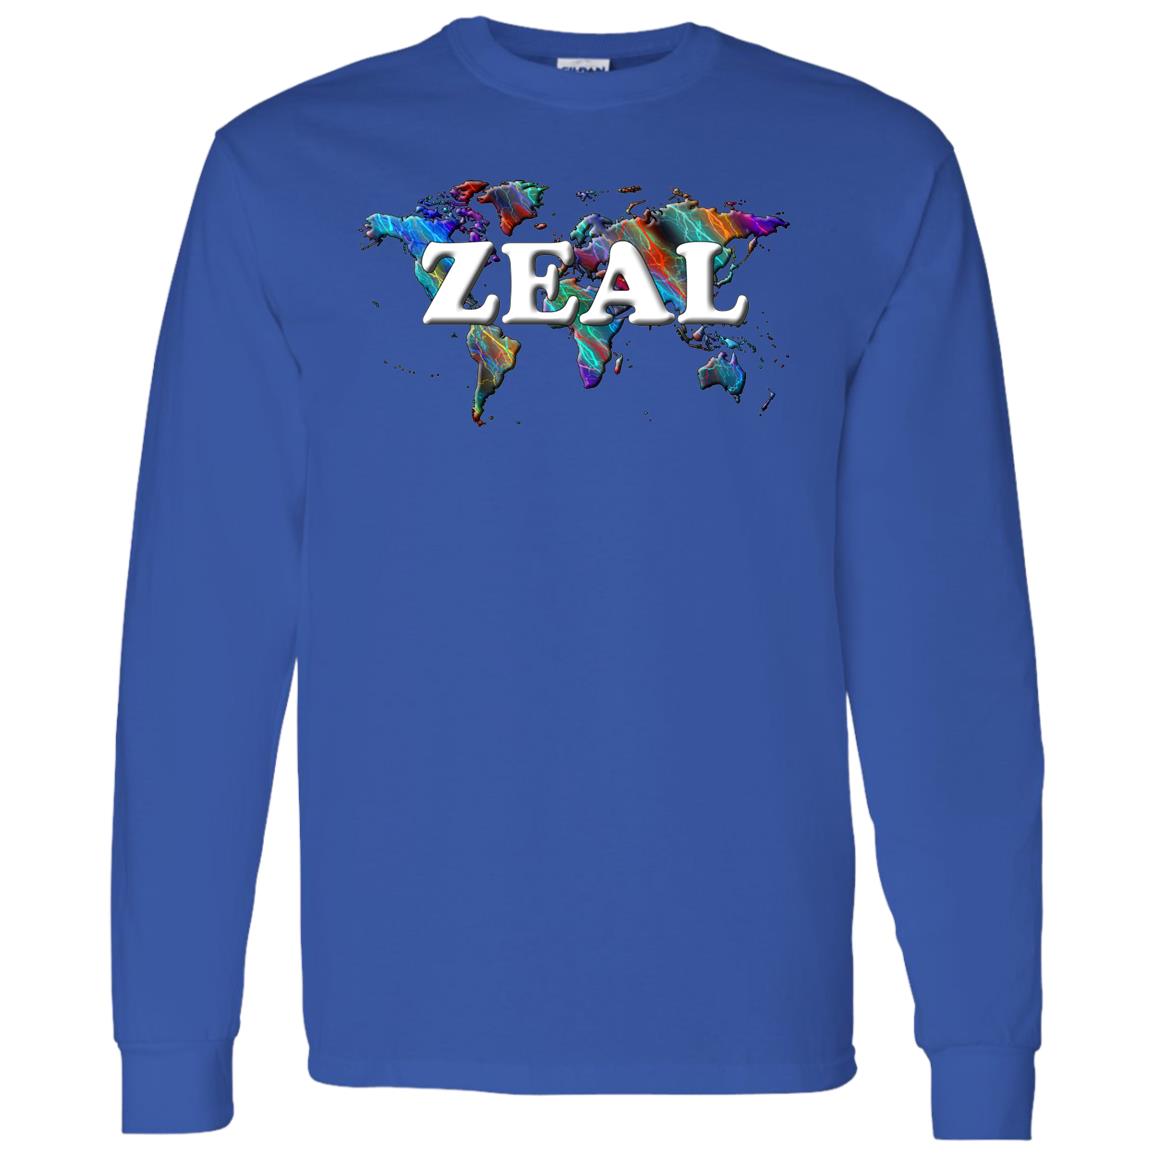 Zeal Long Sleeve T-Shirt